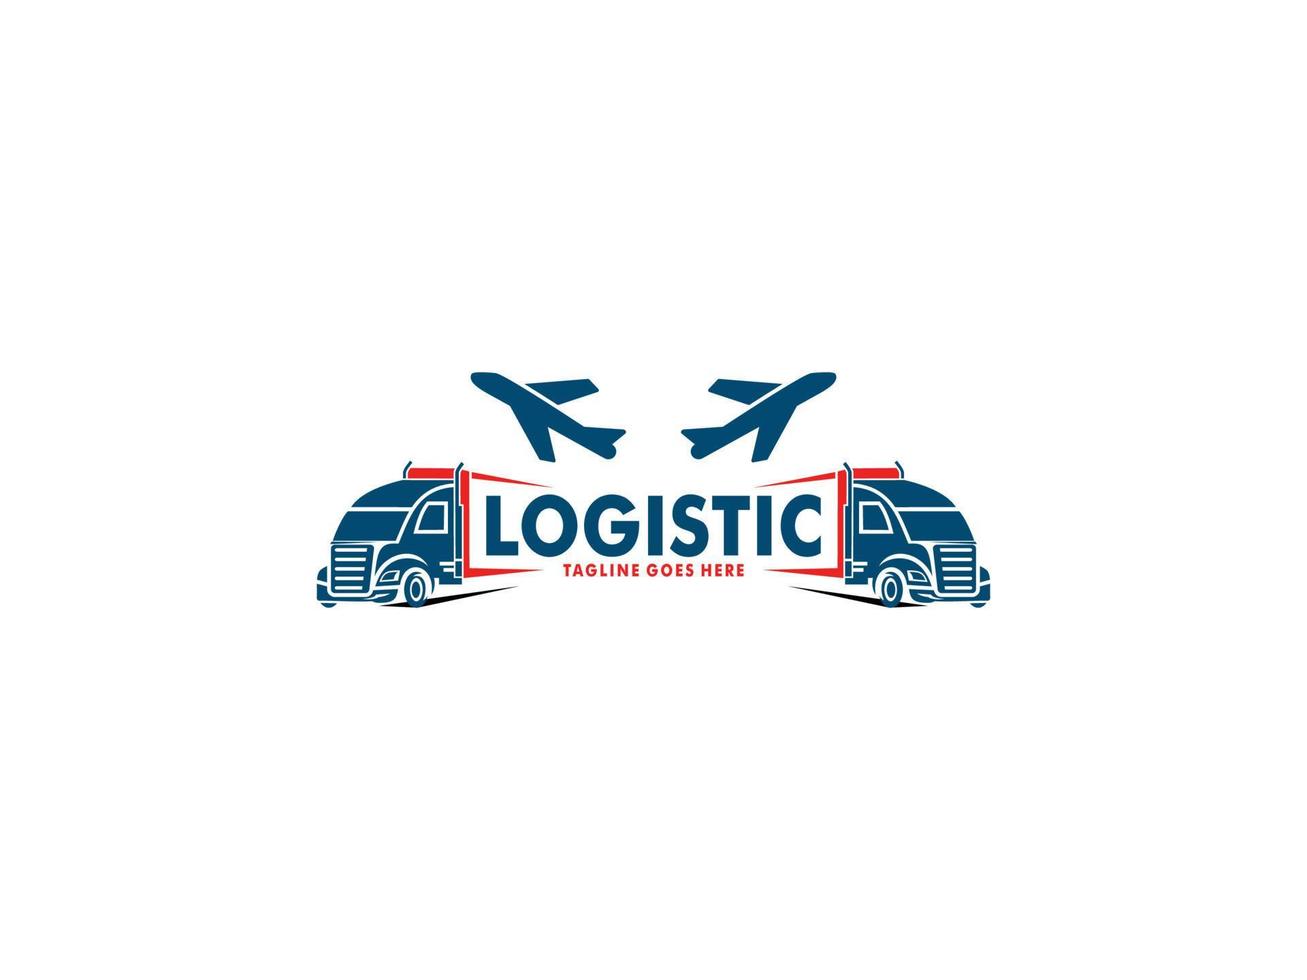 express logistic transportation concept logo design template vector